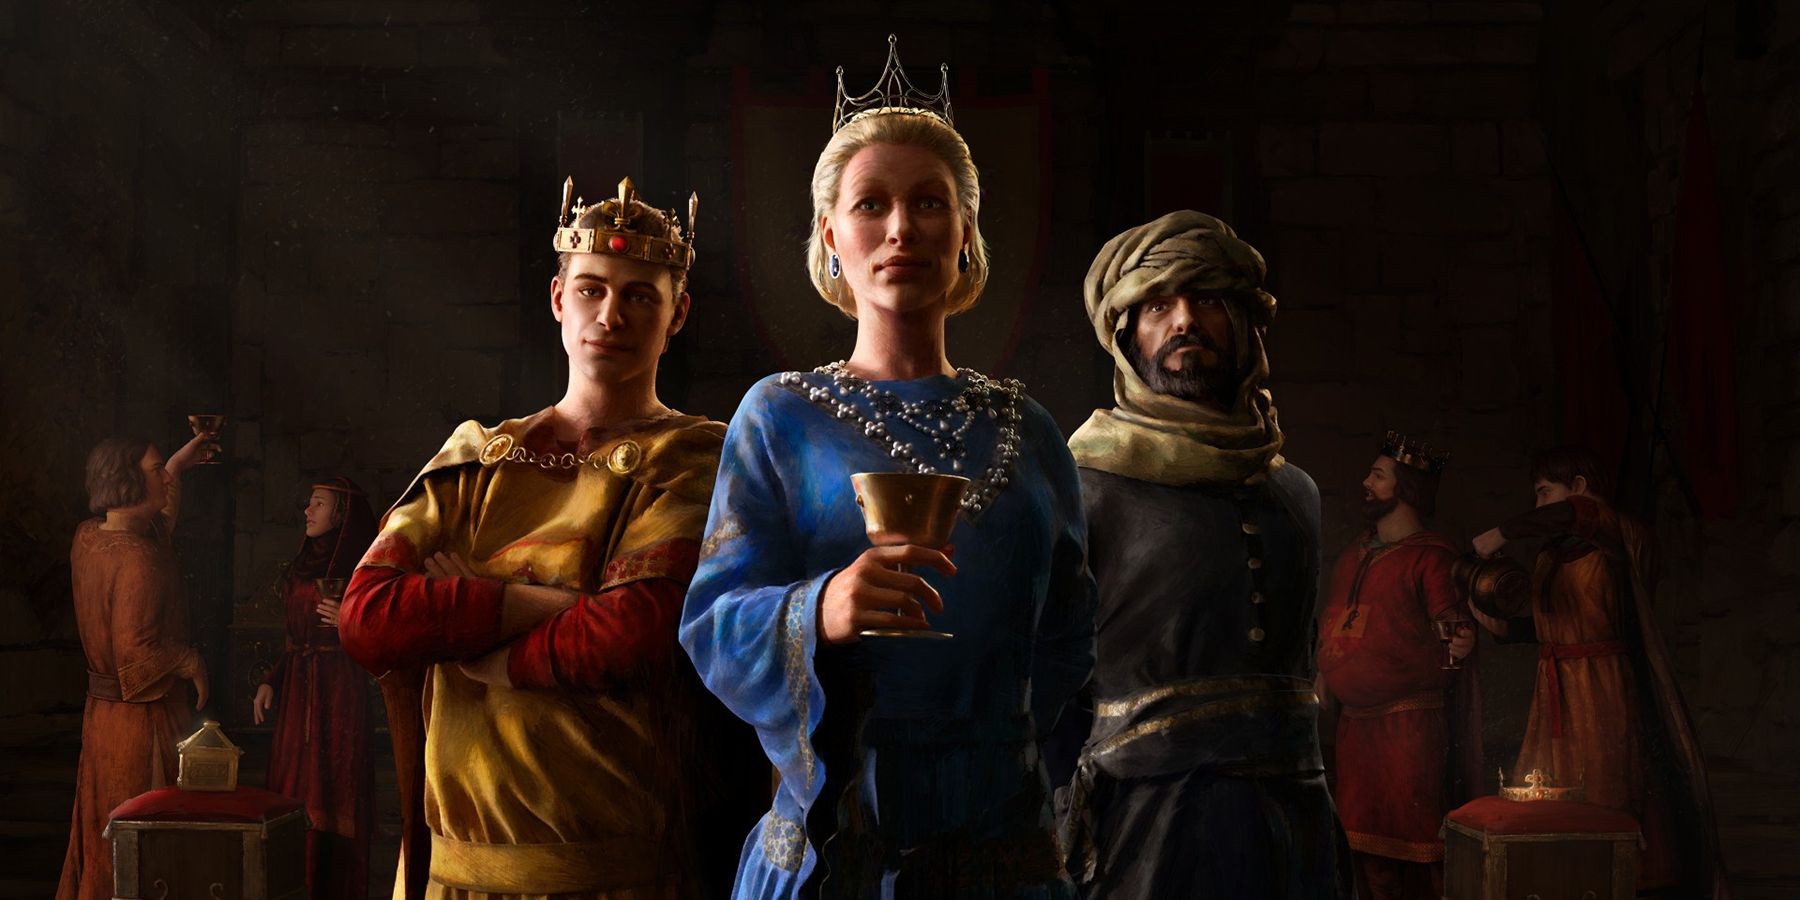 Crusader Kings 3 Royal Court introduced